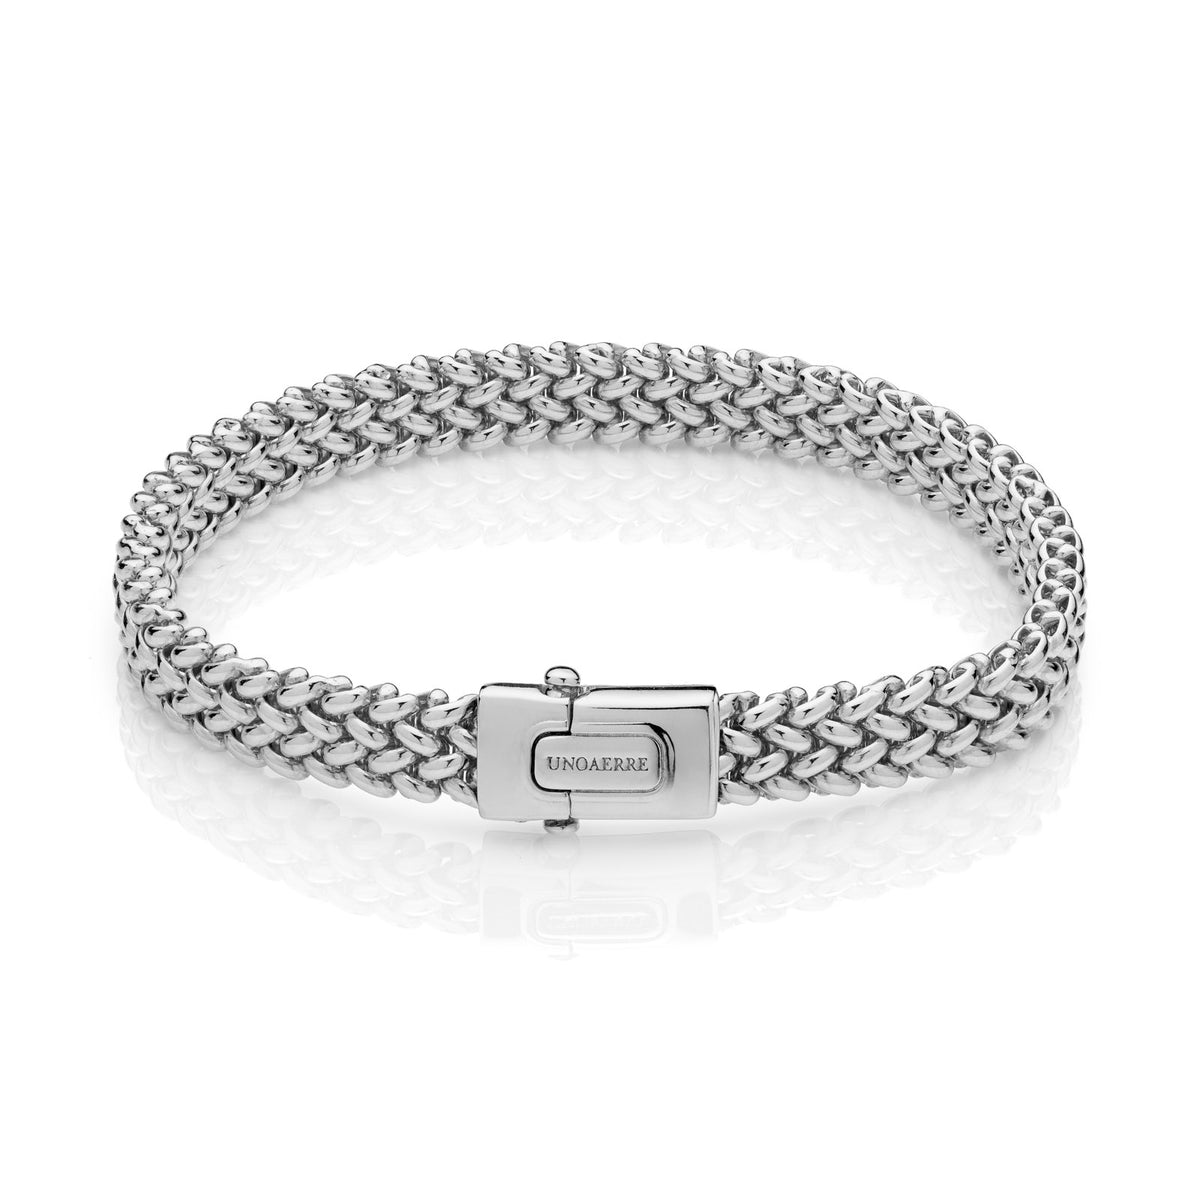 Chicco Bracelet in Unoaerre 6252 Silver